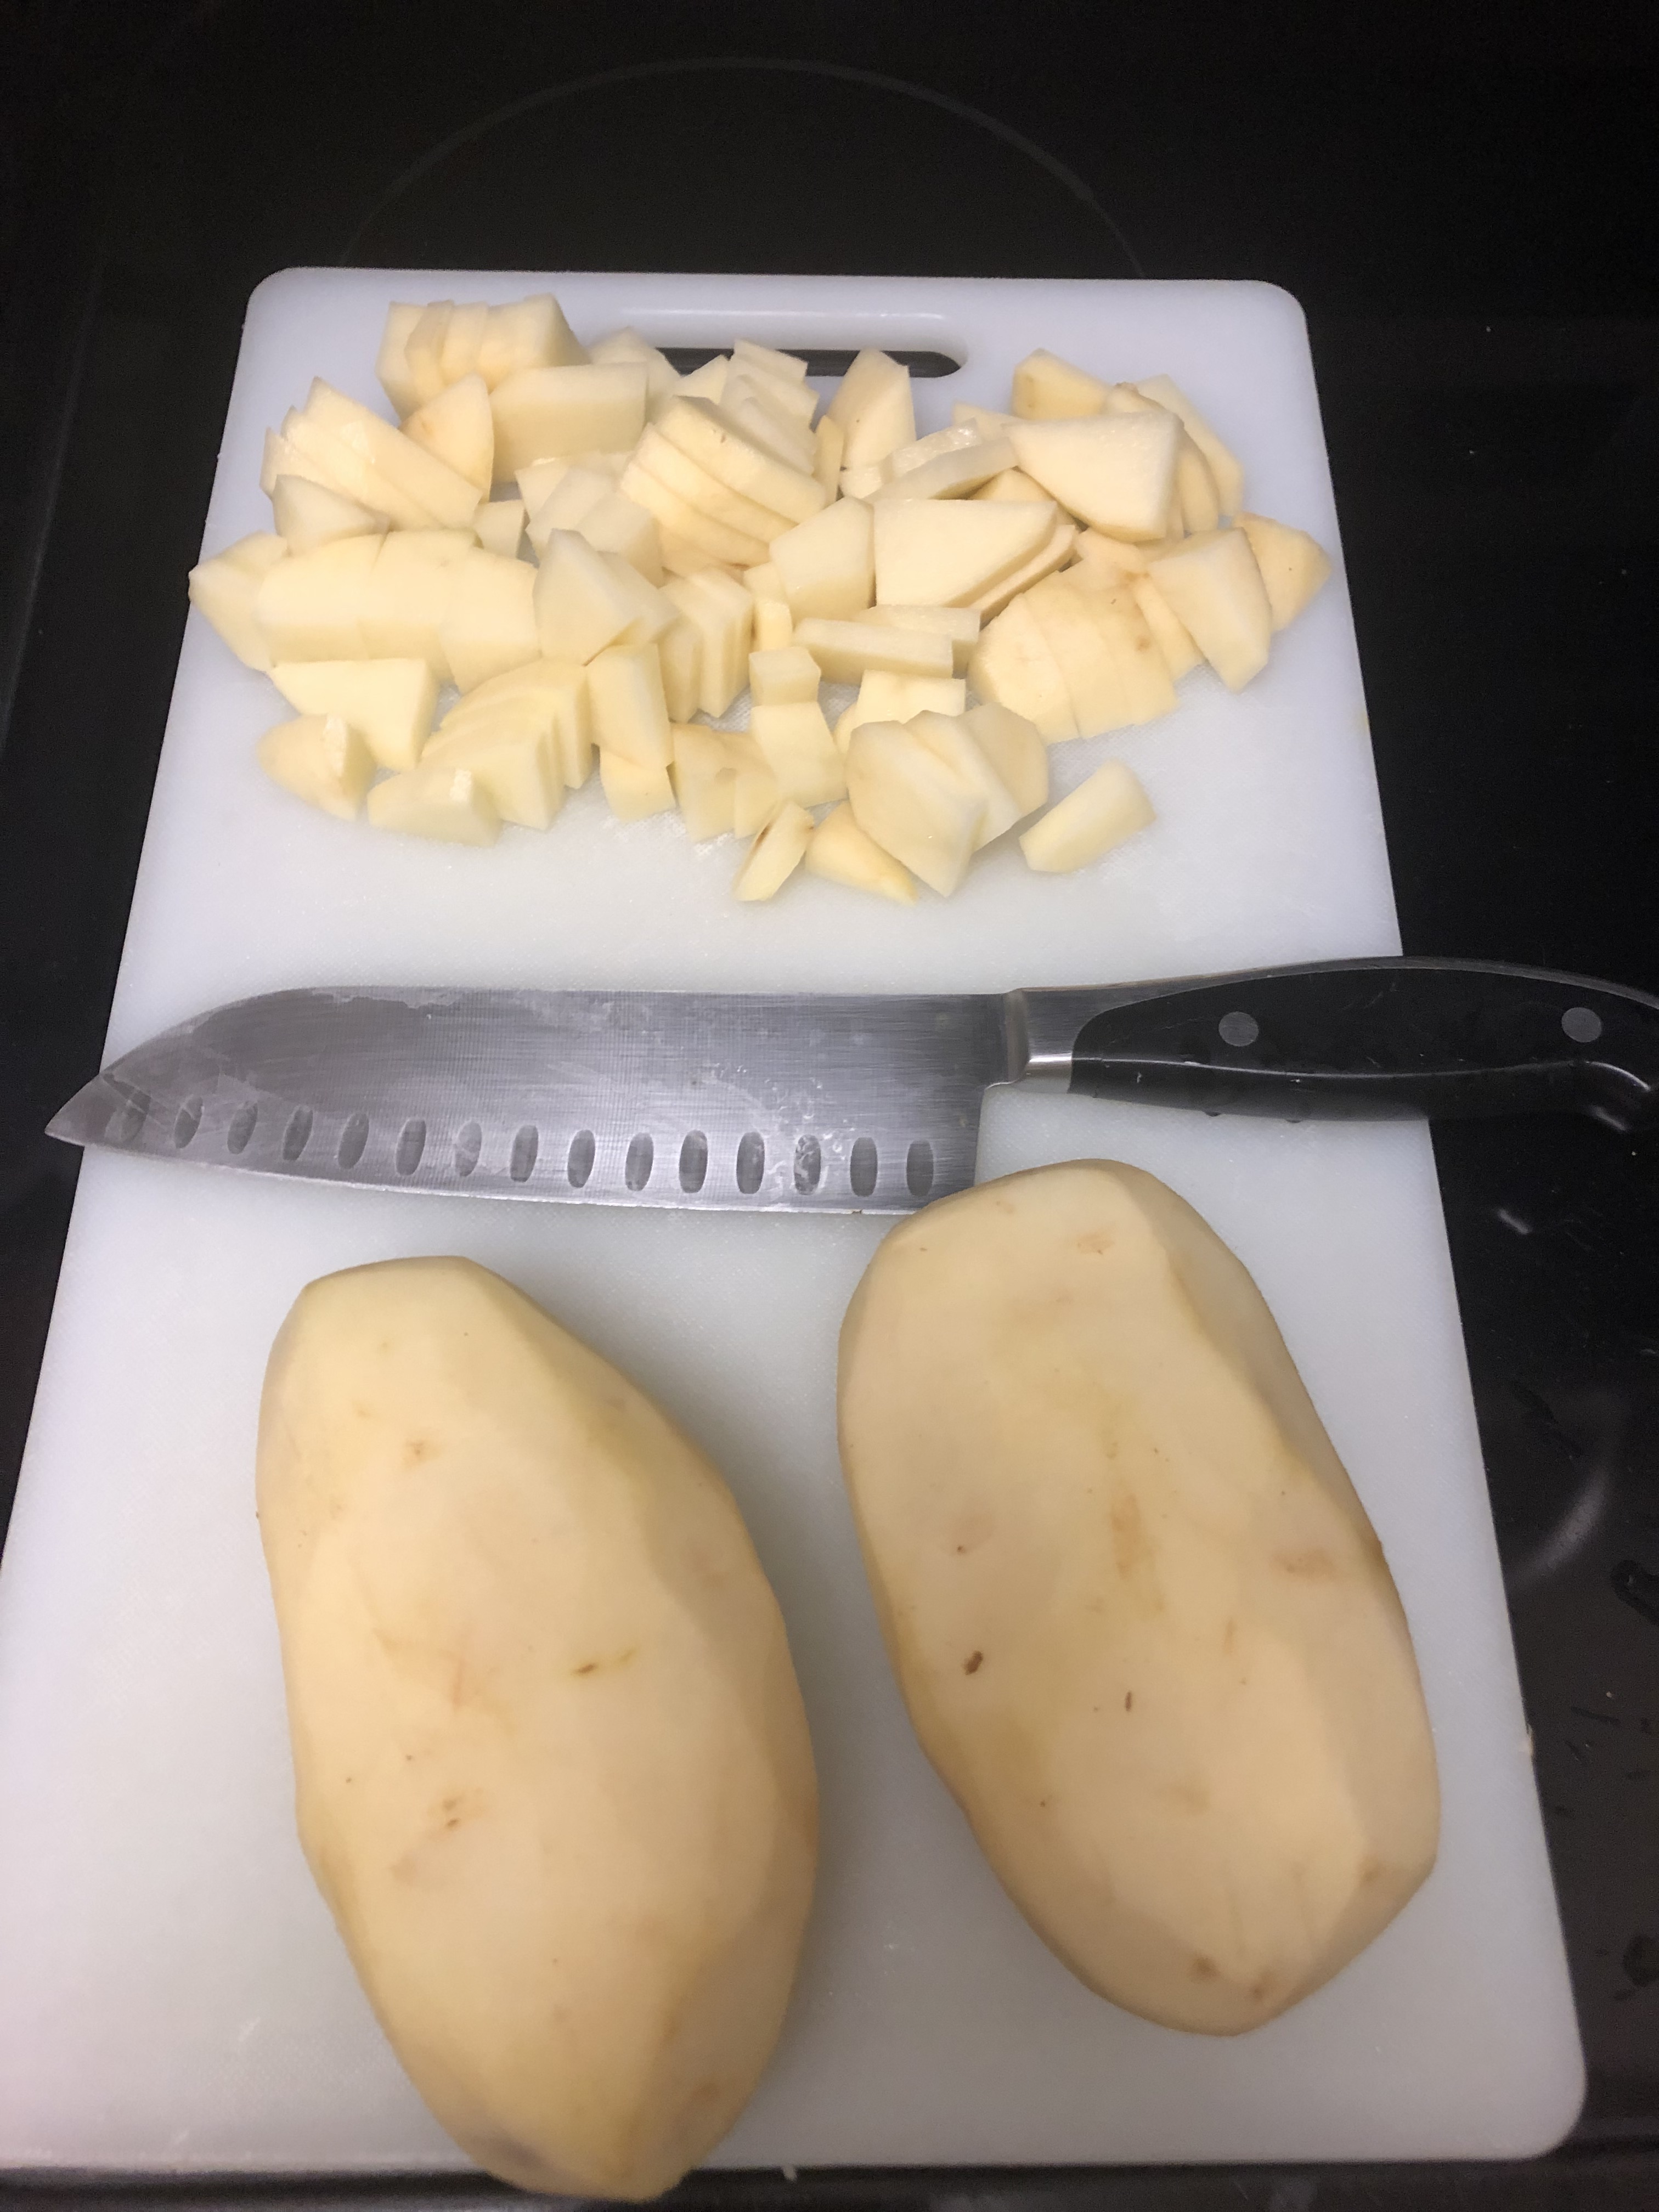 Dicing the peeled potatoes